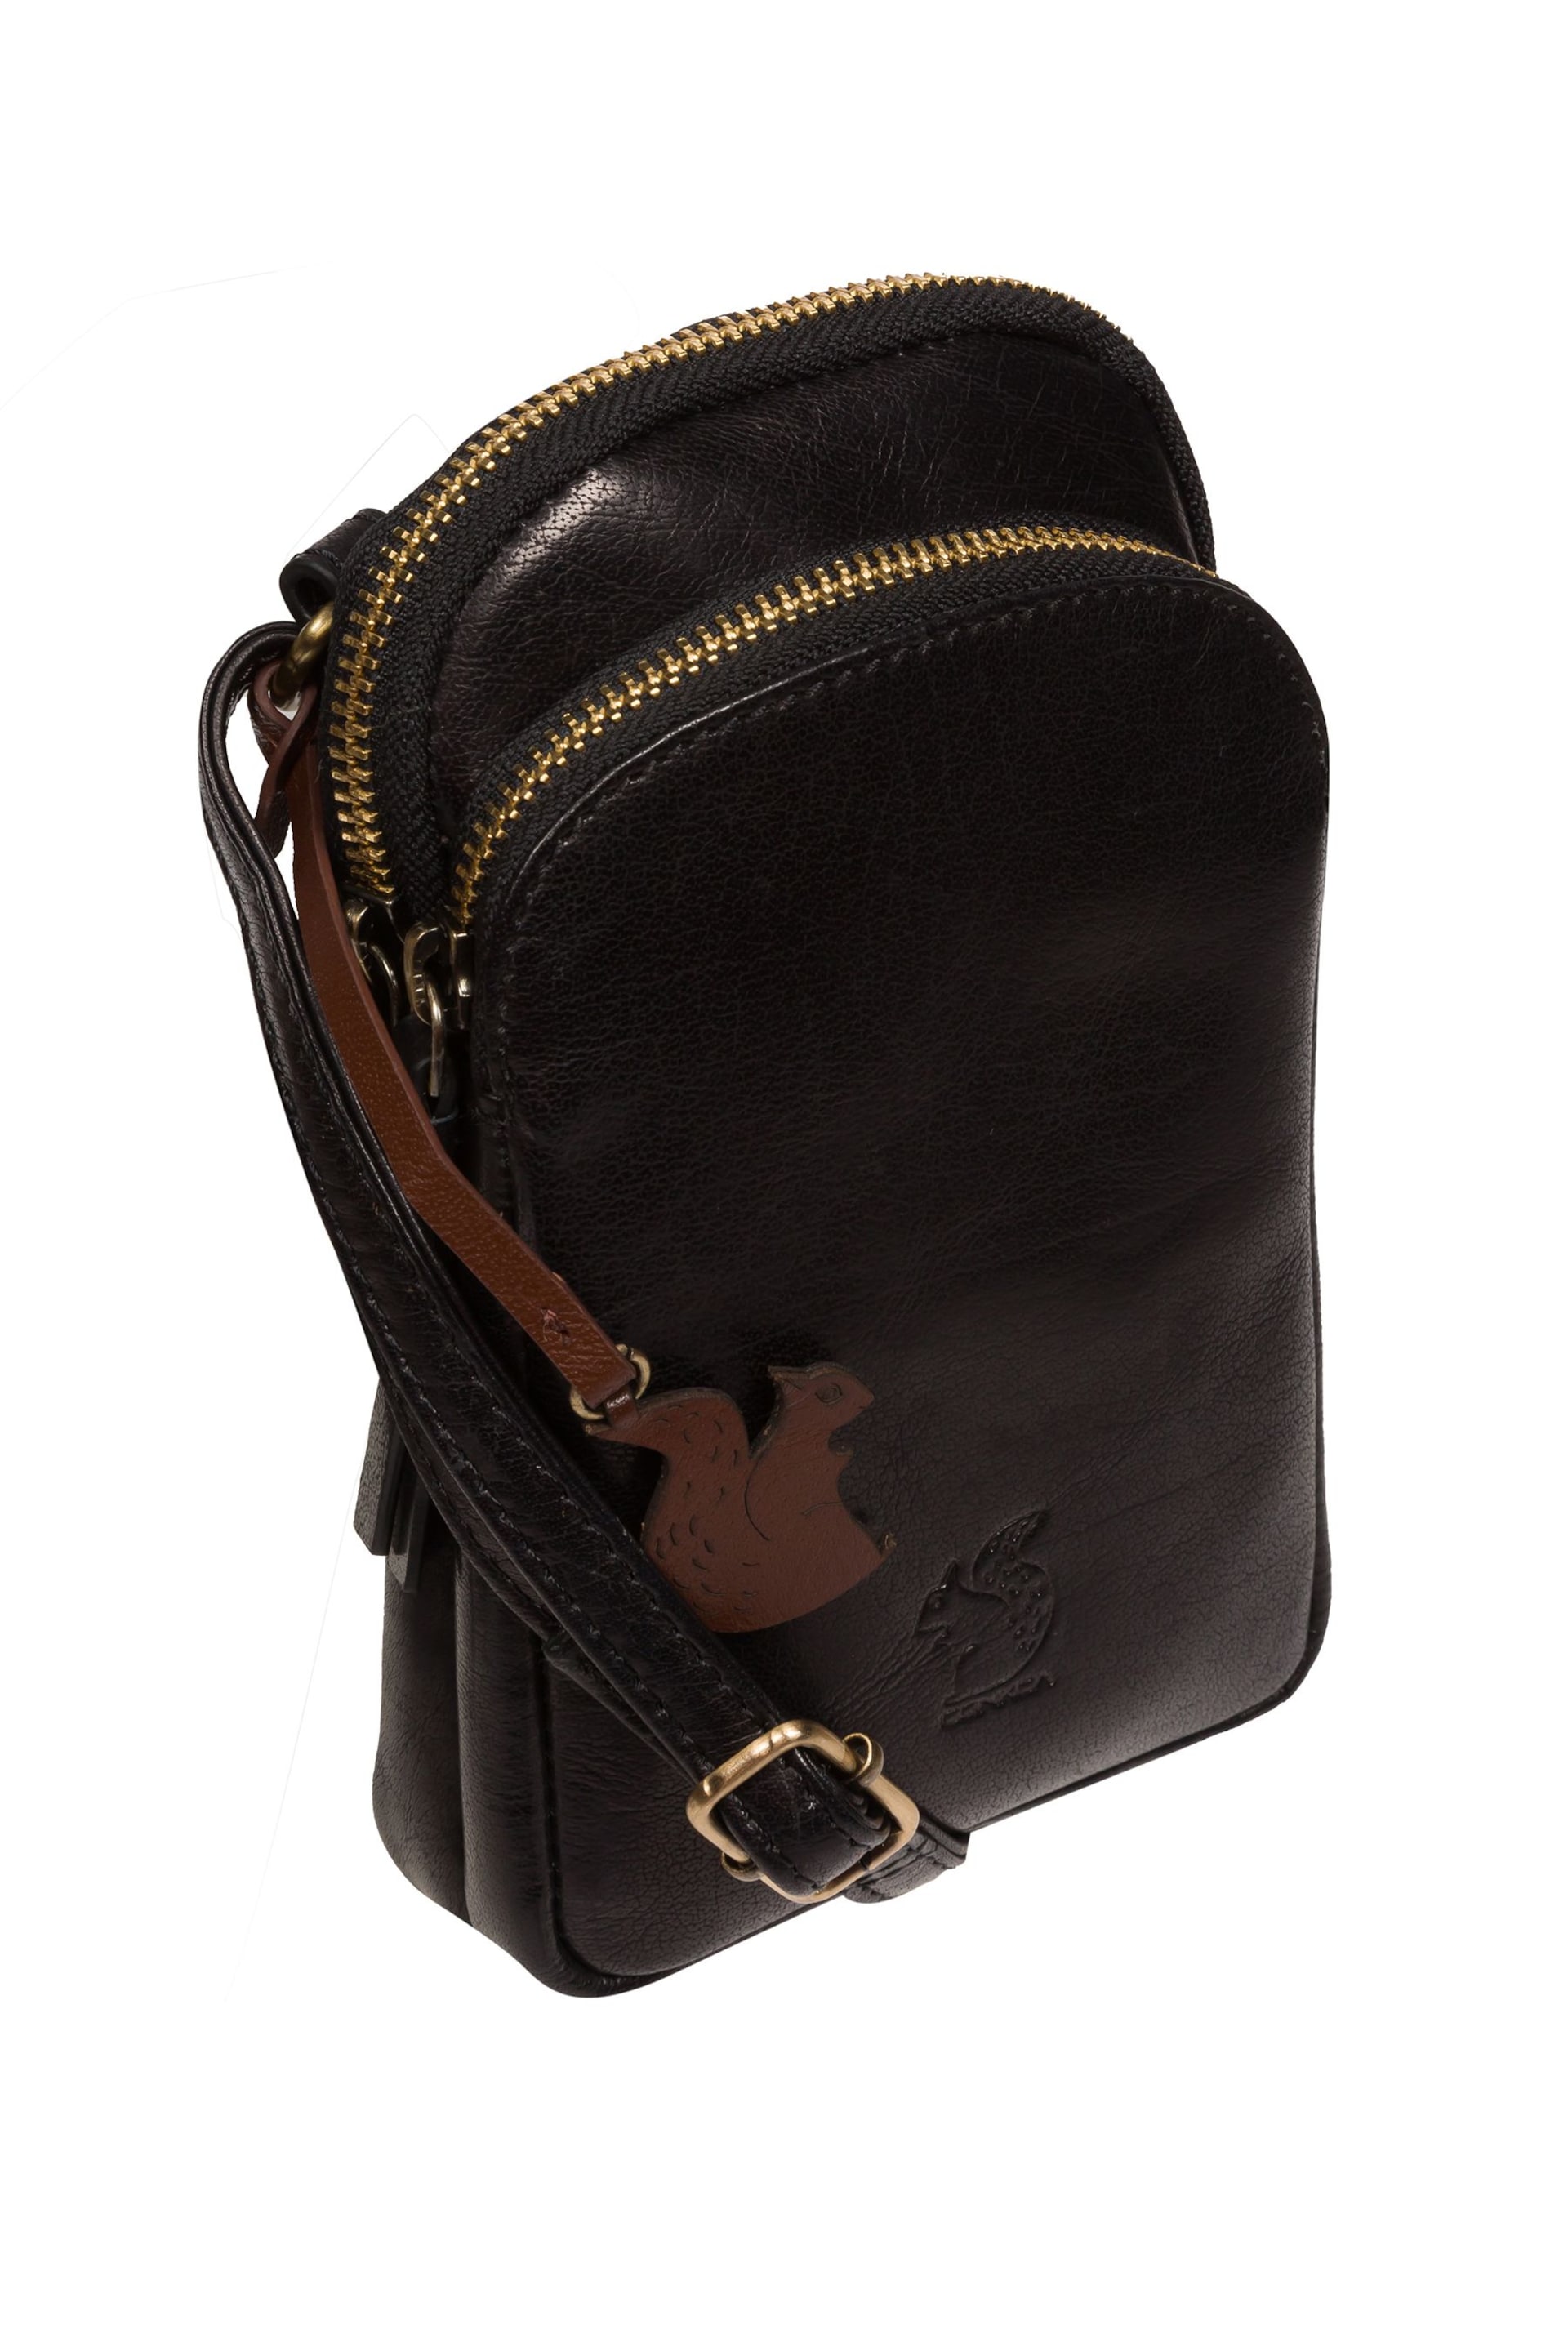 Conkca 'Leia' Leather Cross-Body Phone Bag - Image 6 of 8